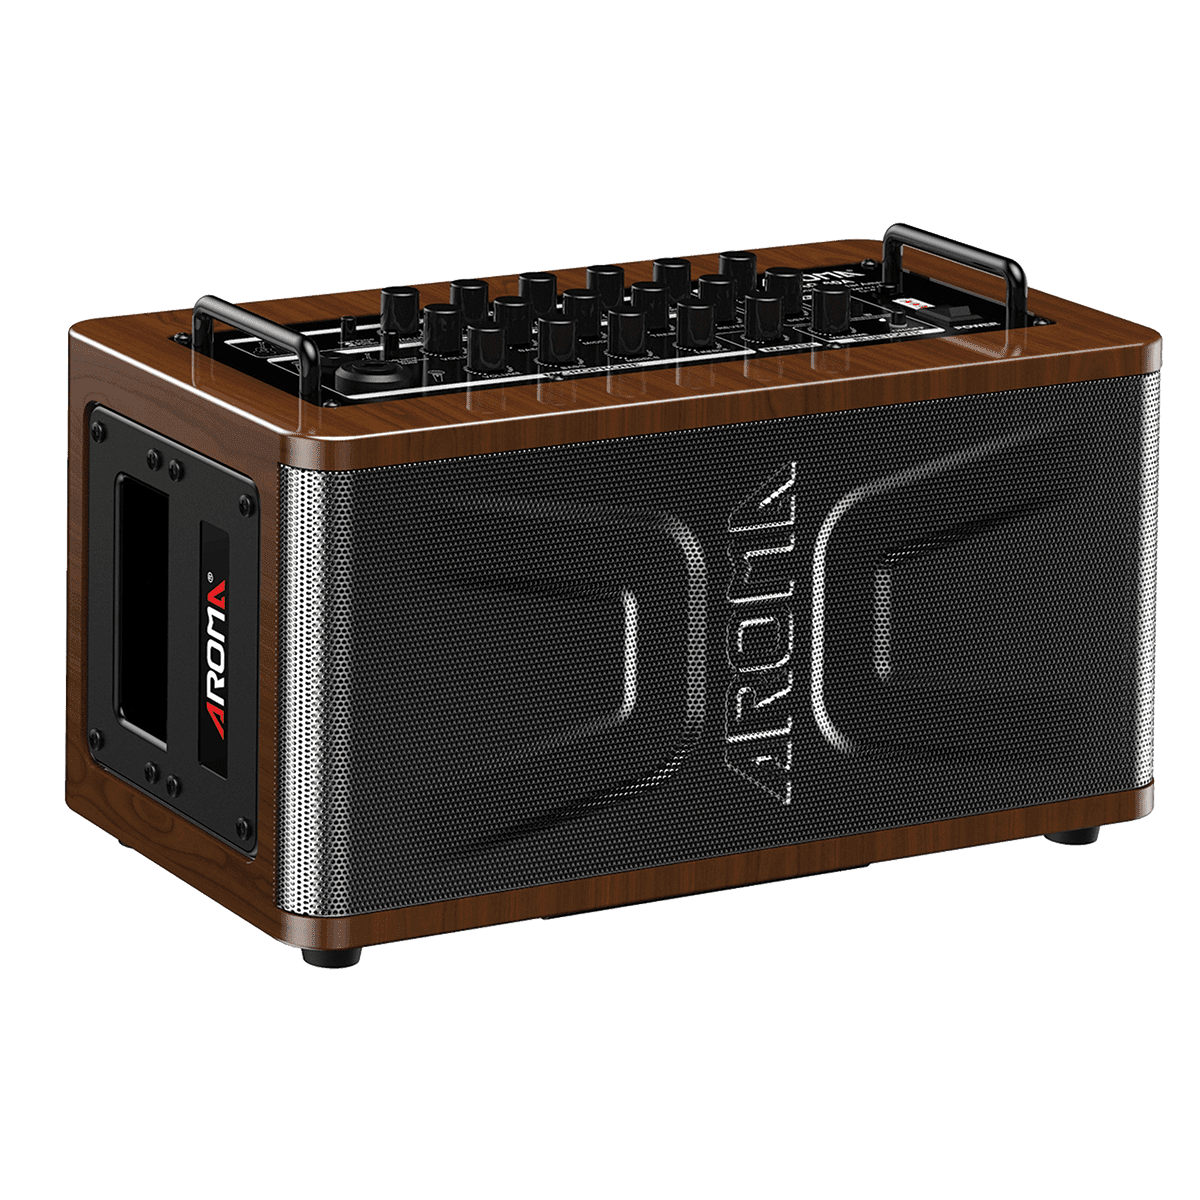 Aroma AG-60A 60W Acoustic Guitar Rechargable Amplifier